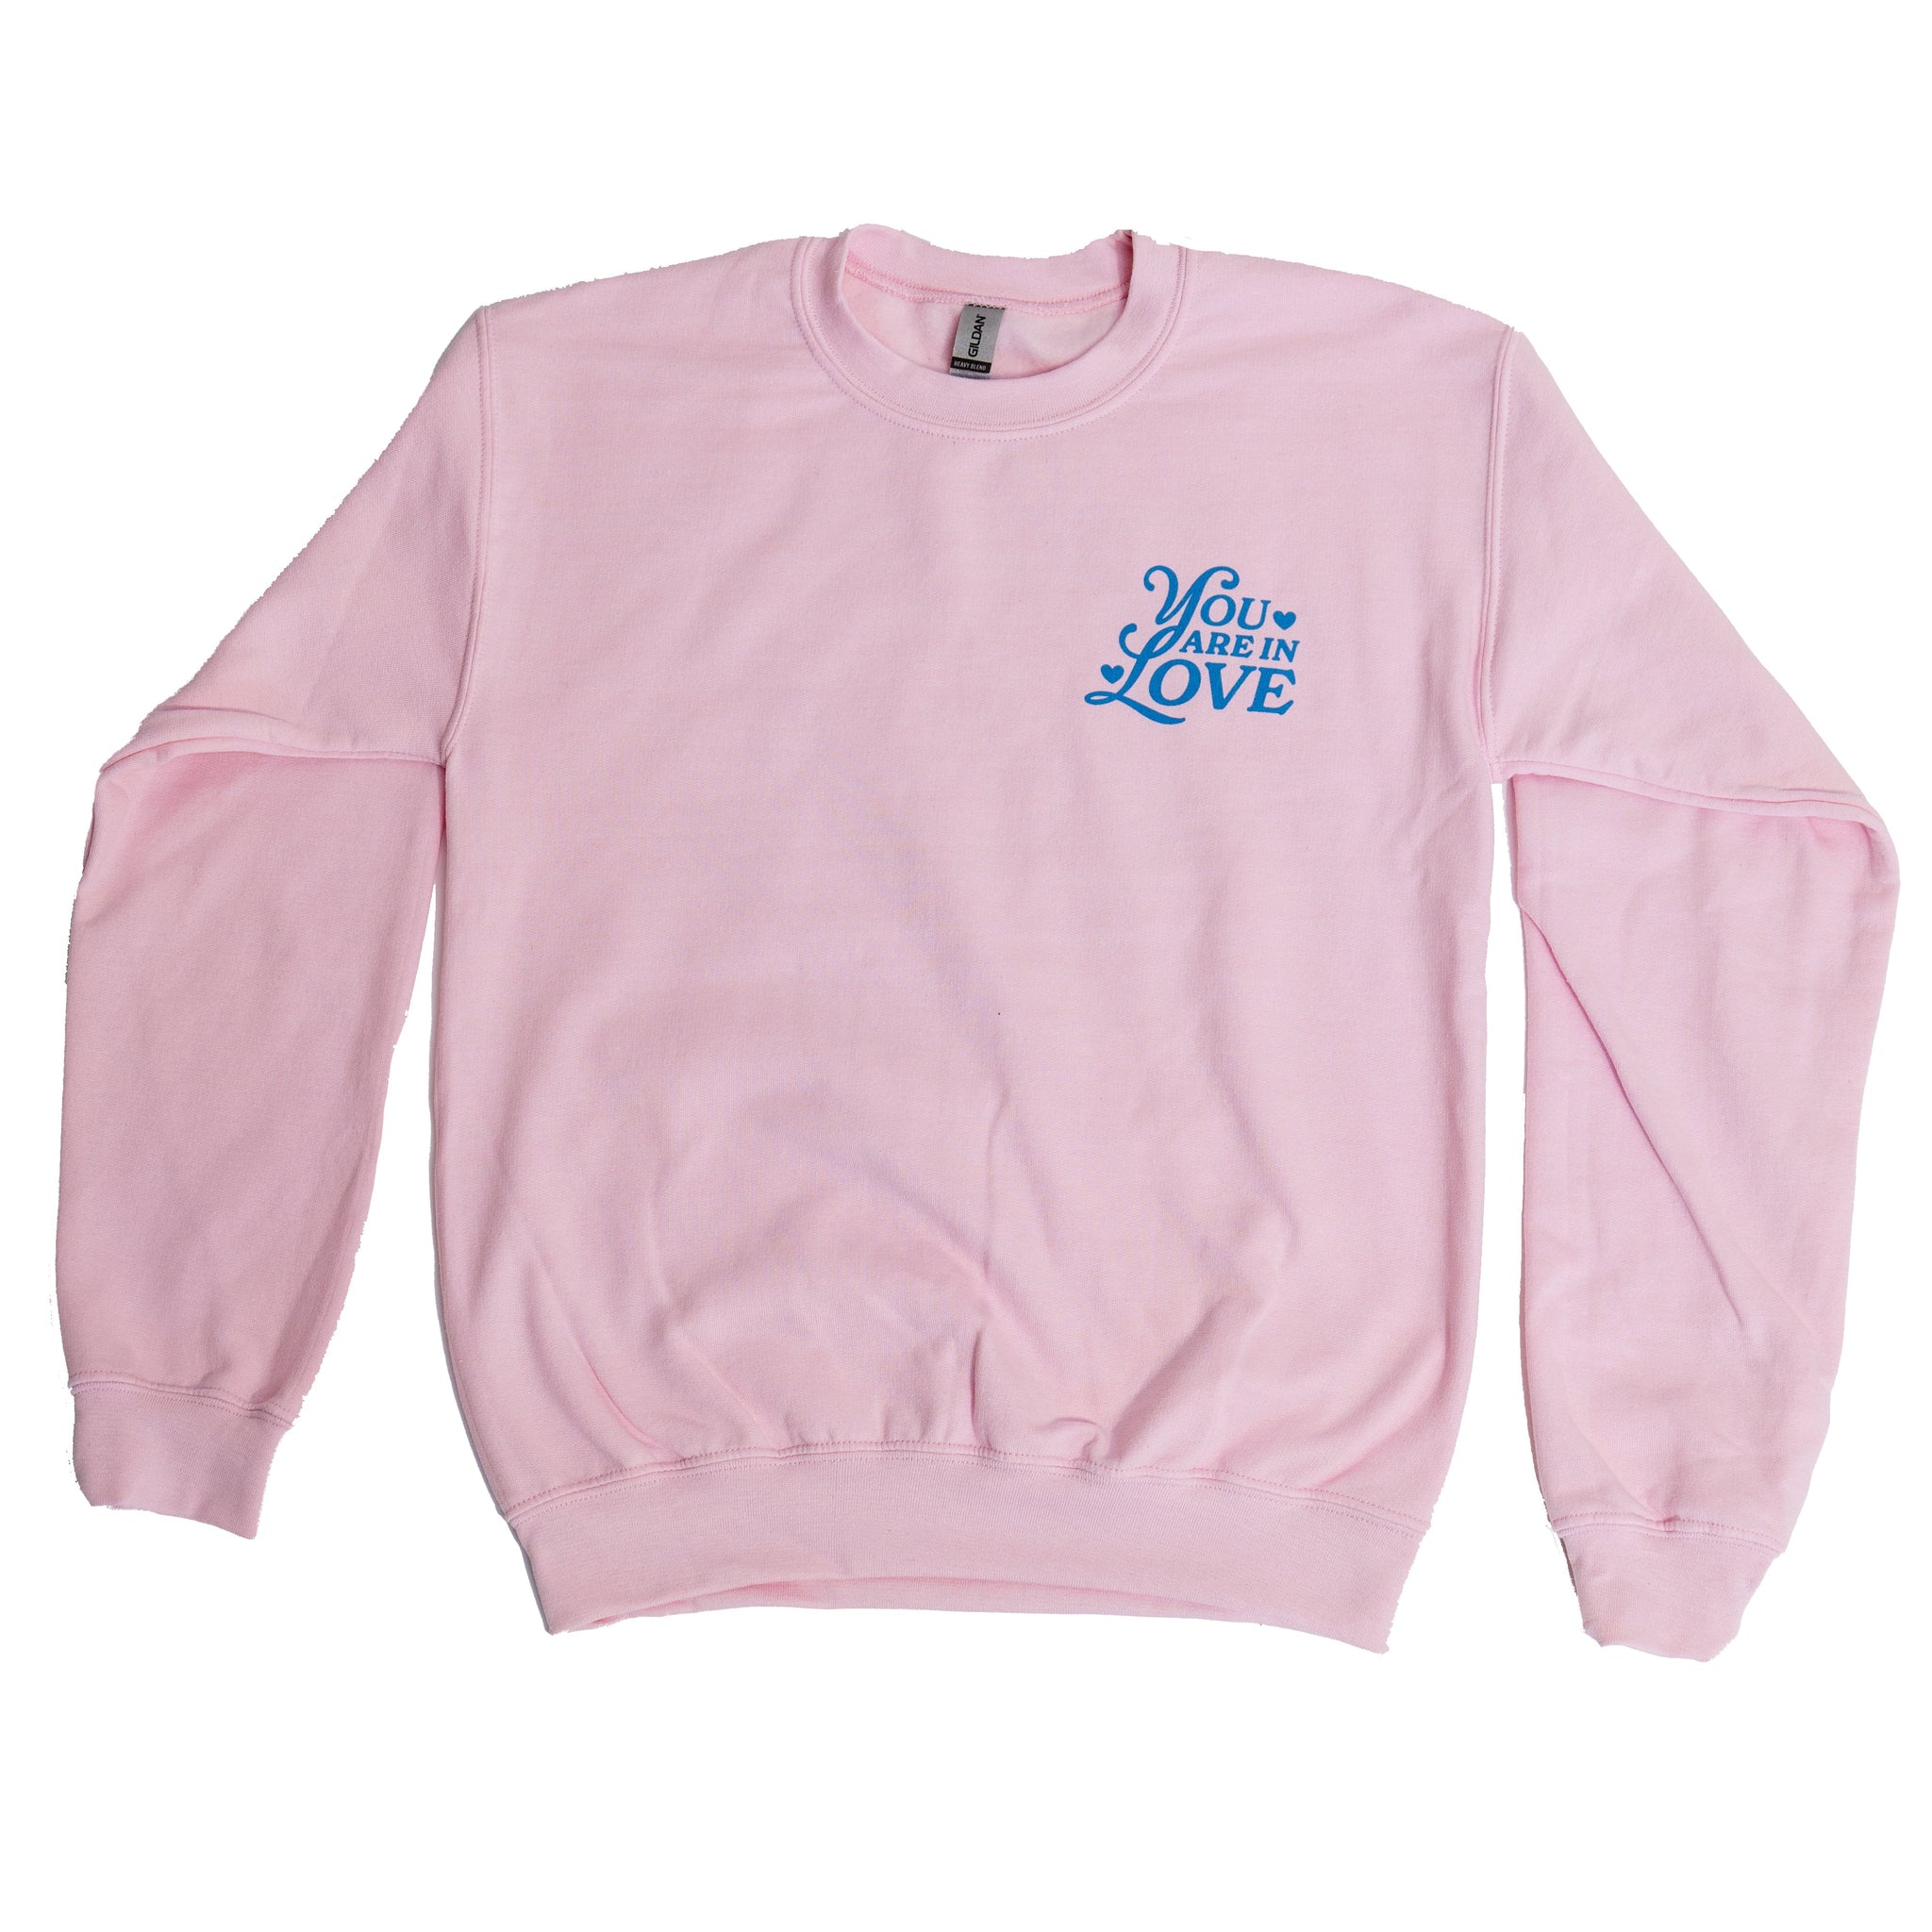 You Are In Love Sweatshirt